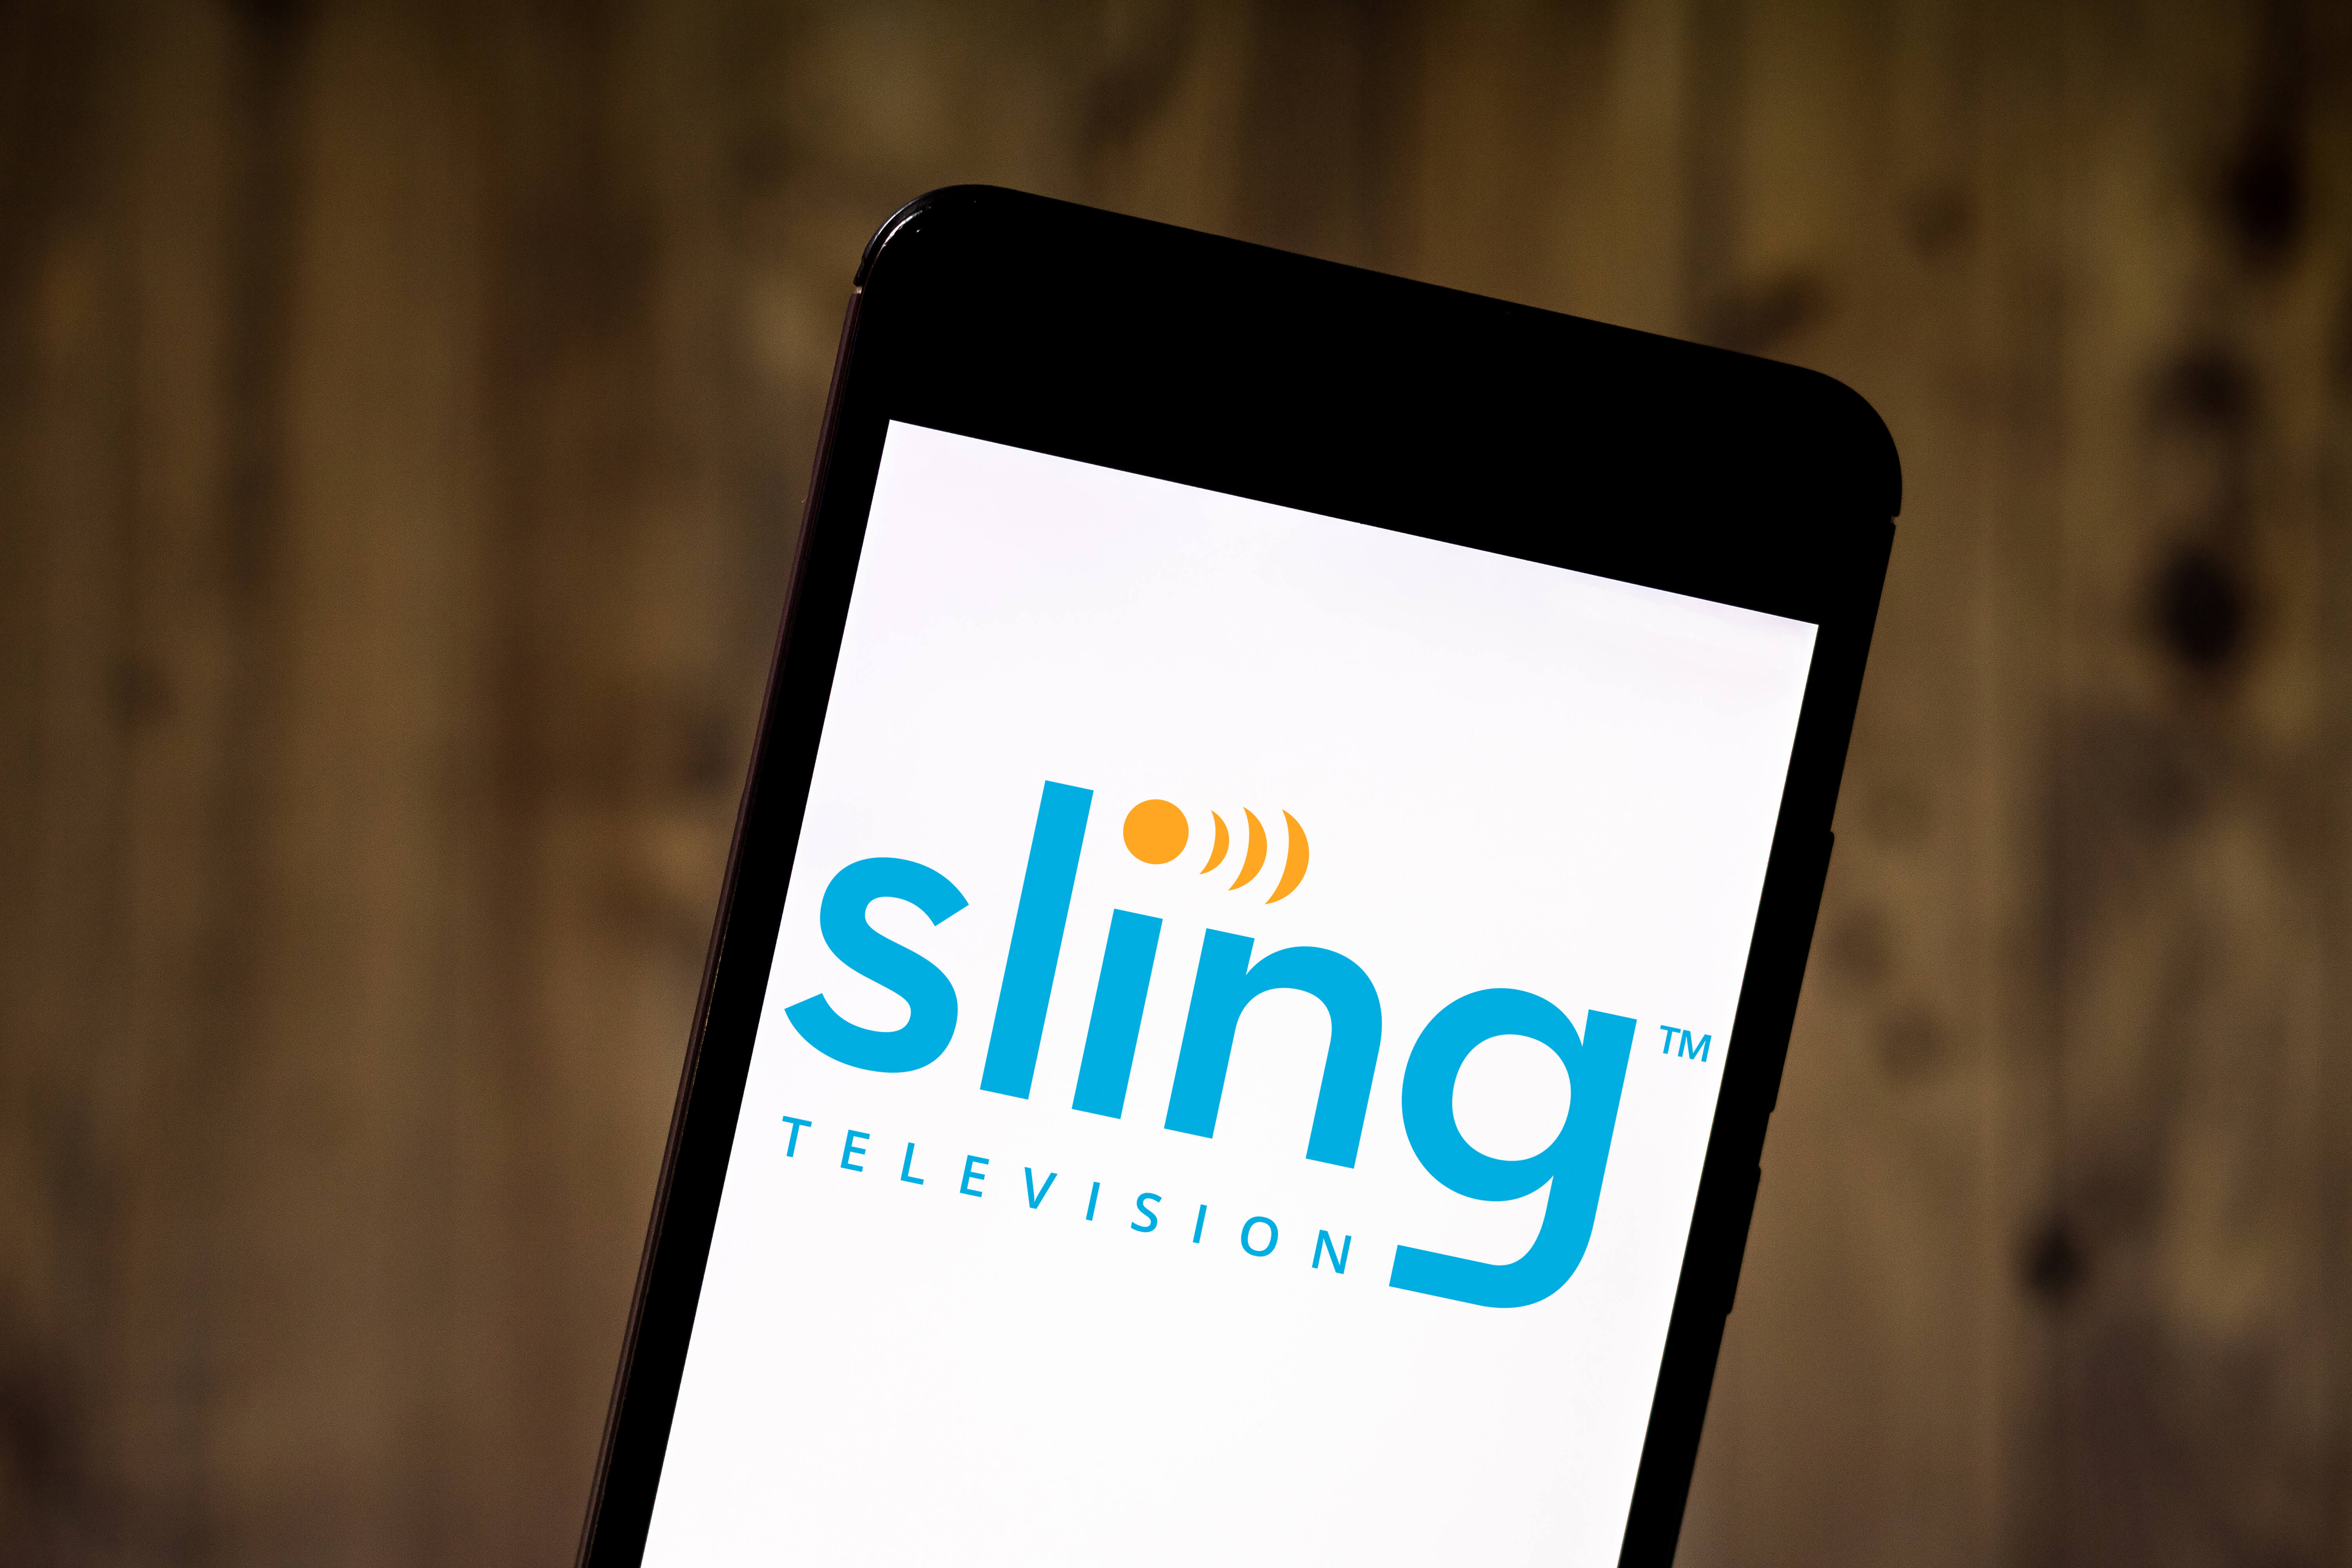 Accessing Sling TV through smart phone